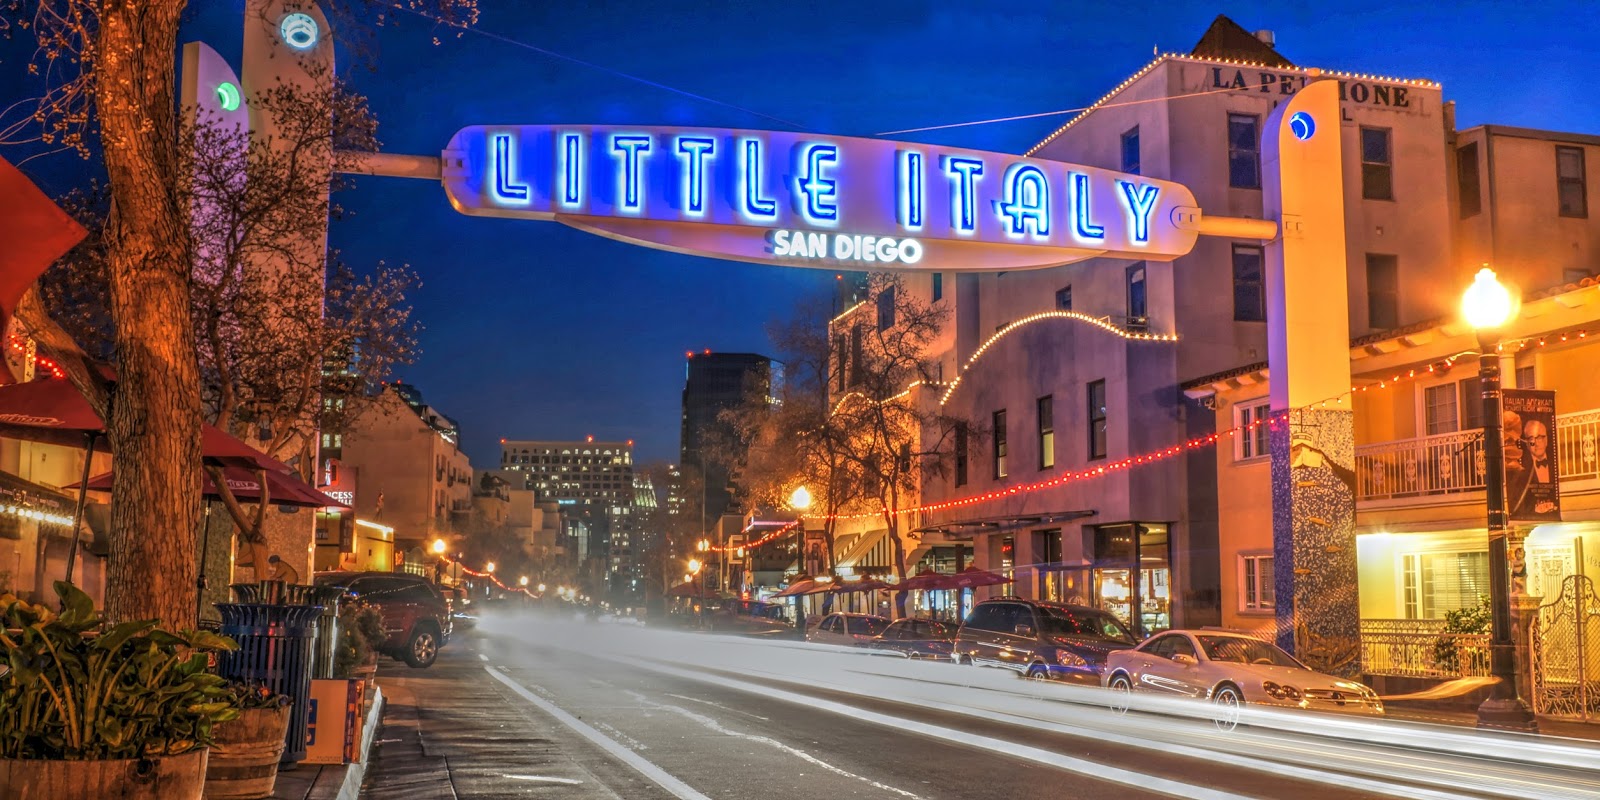 Taste of Little Italy Returns June 14 San Diego Dining Dish!